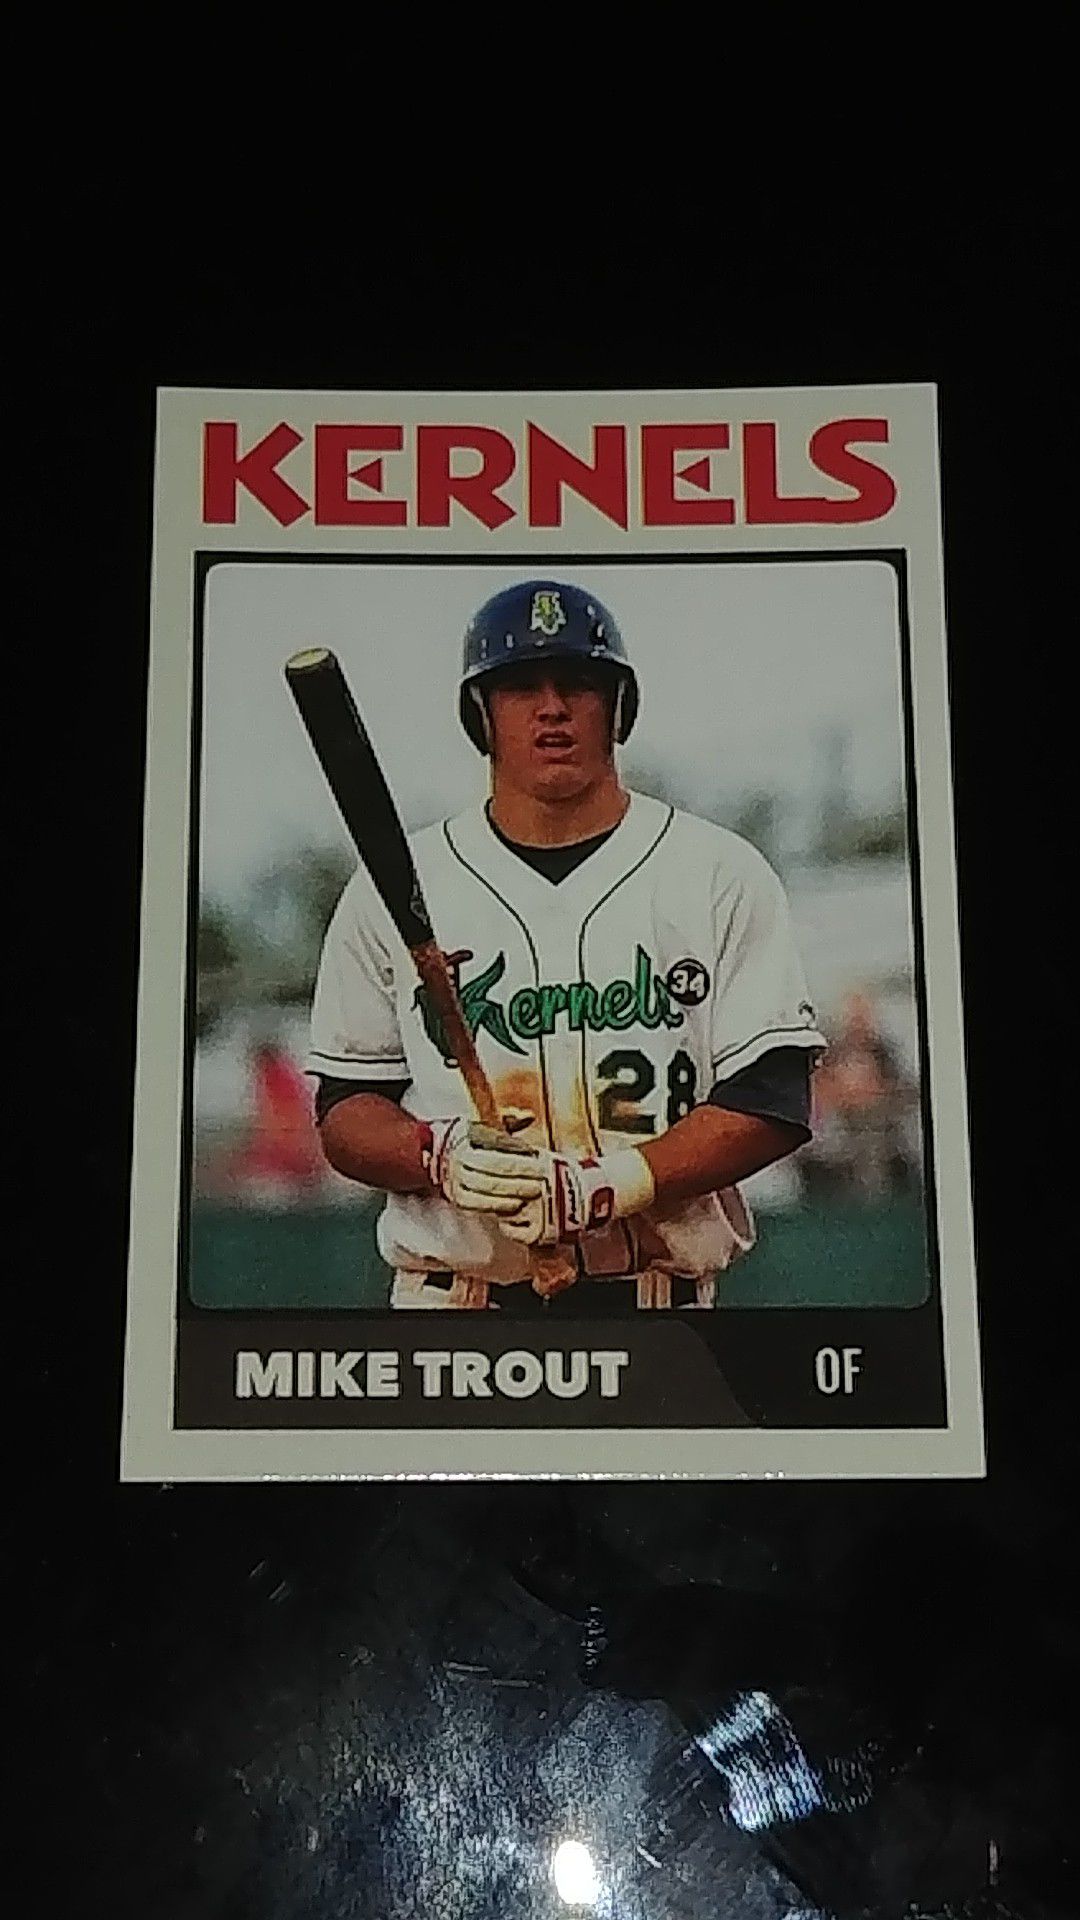 2011 Mike Trout Cedar Rapid Kernals Baseball Card